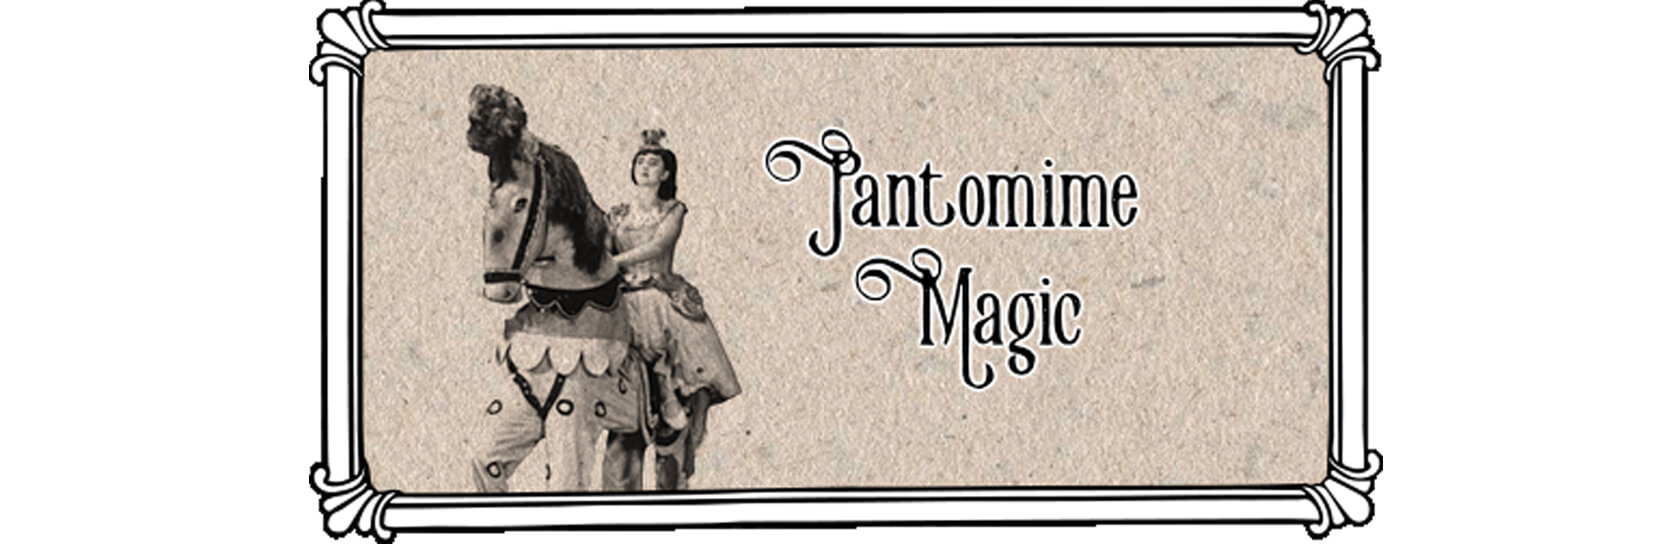 Pantomime Magic